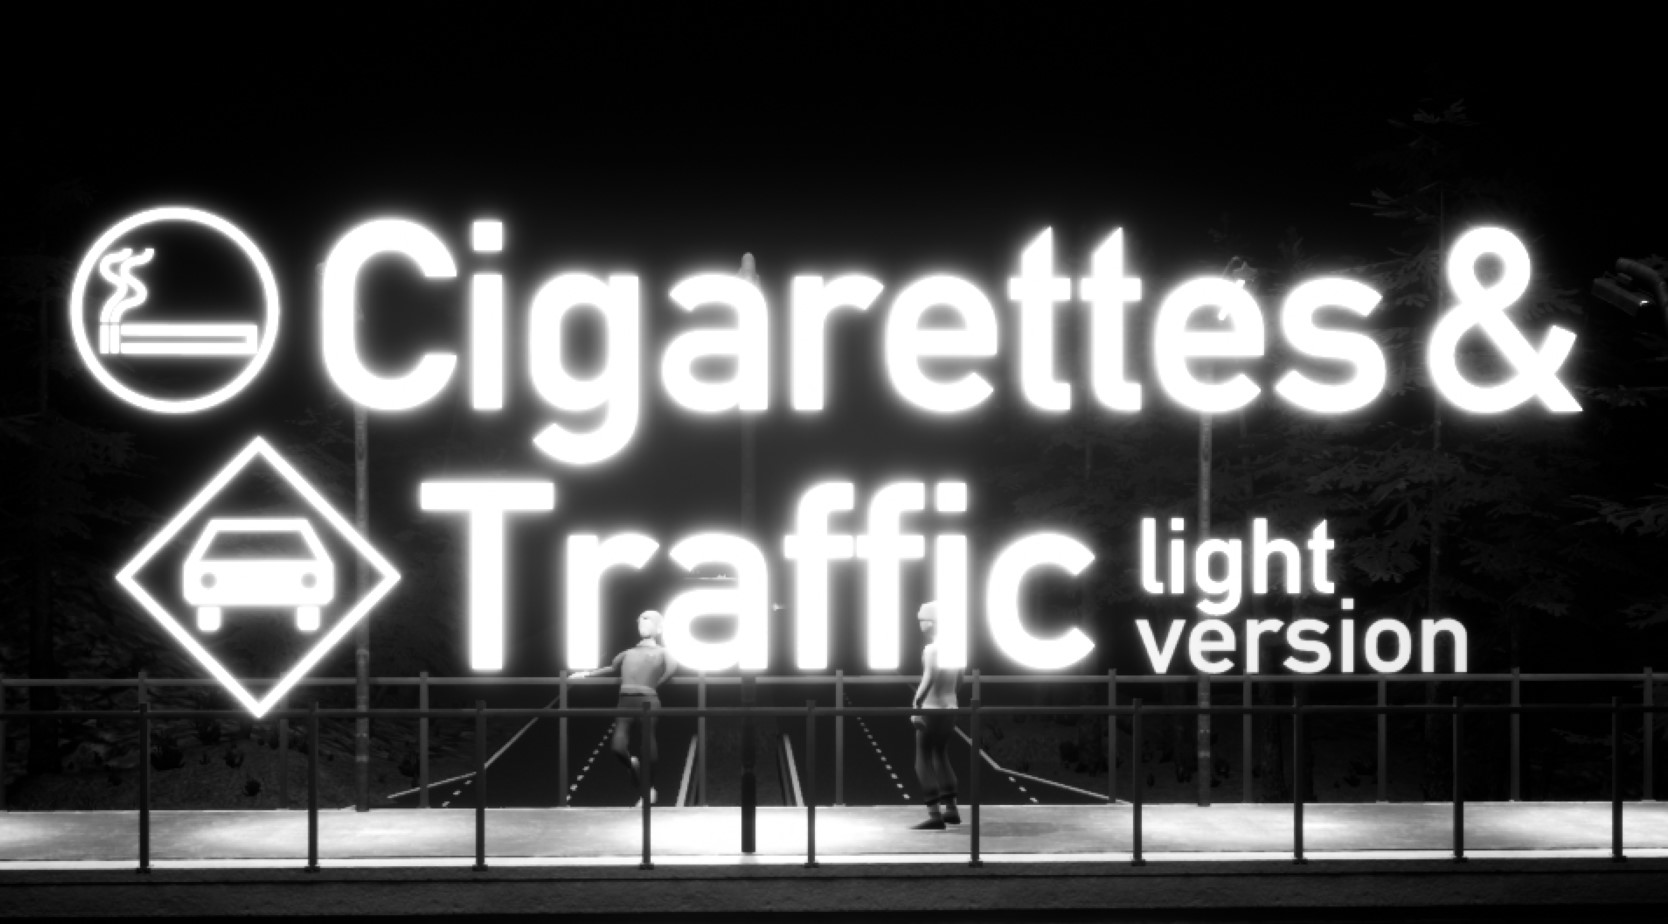 Cigarettes & Traffic